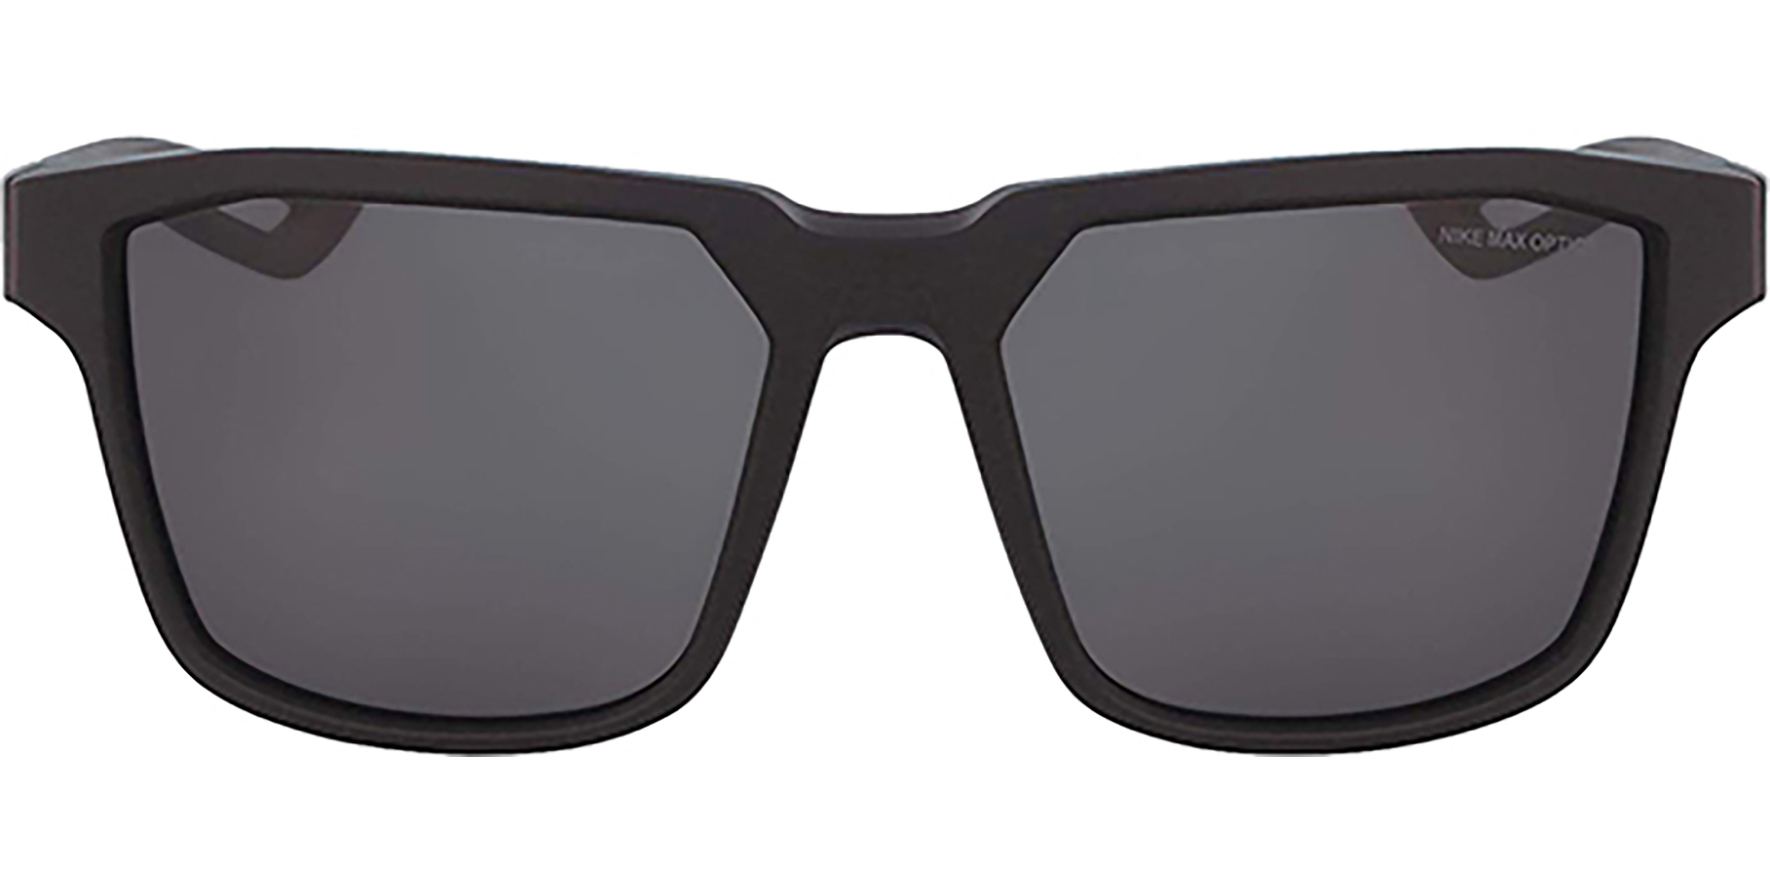 Nike Fleet Men's Matte Oil Grey Classic Square Sunglasses with Max Optics - image 3 of 4